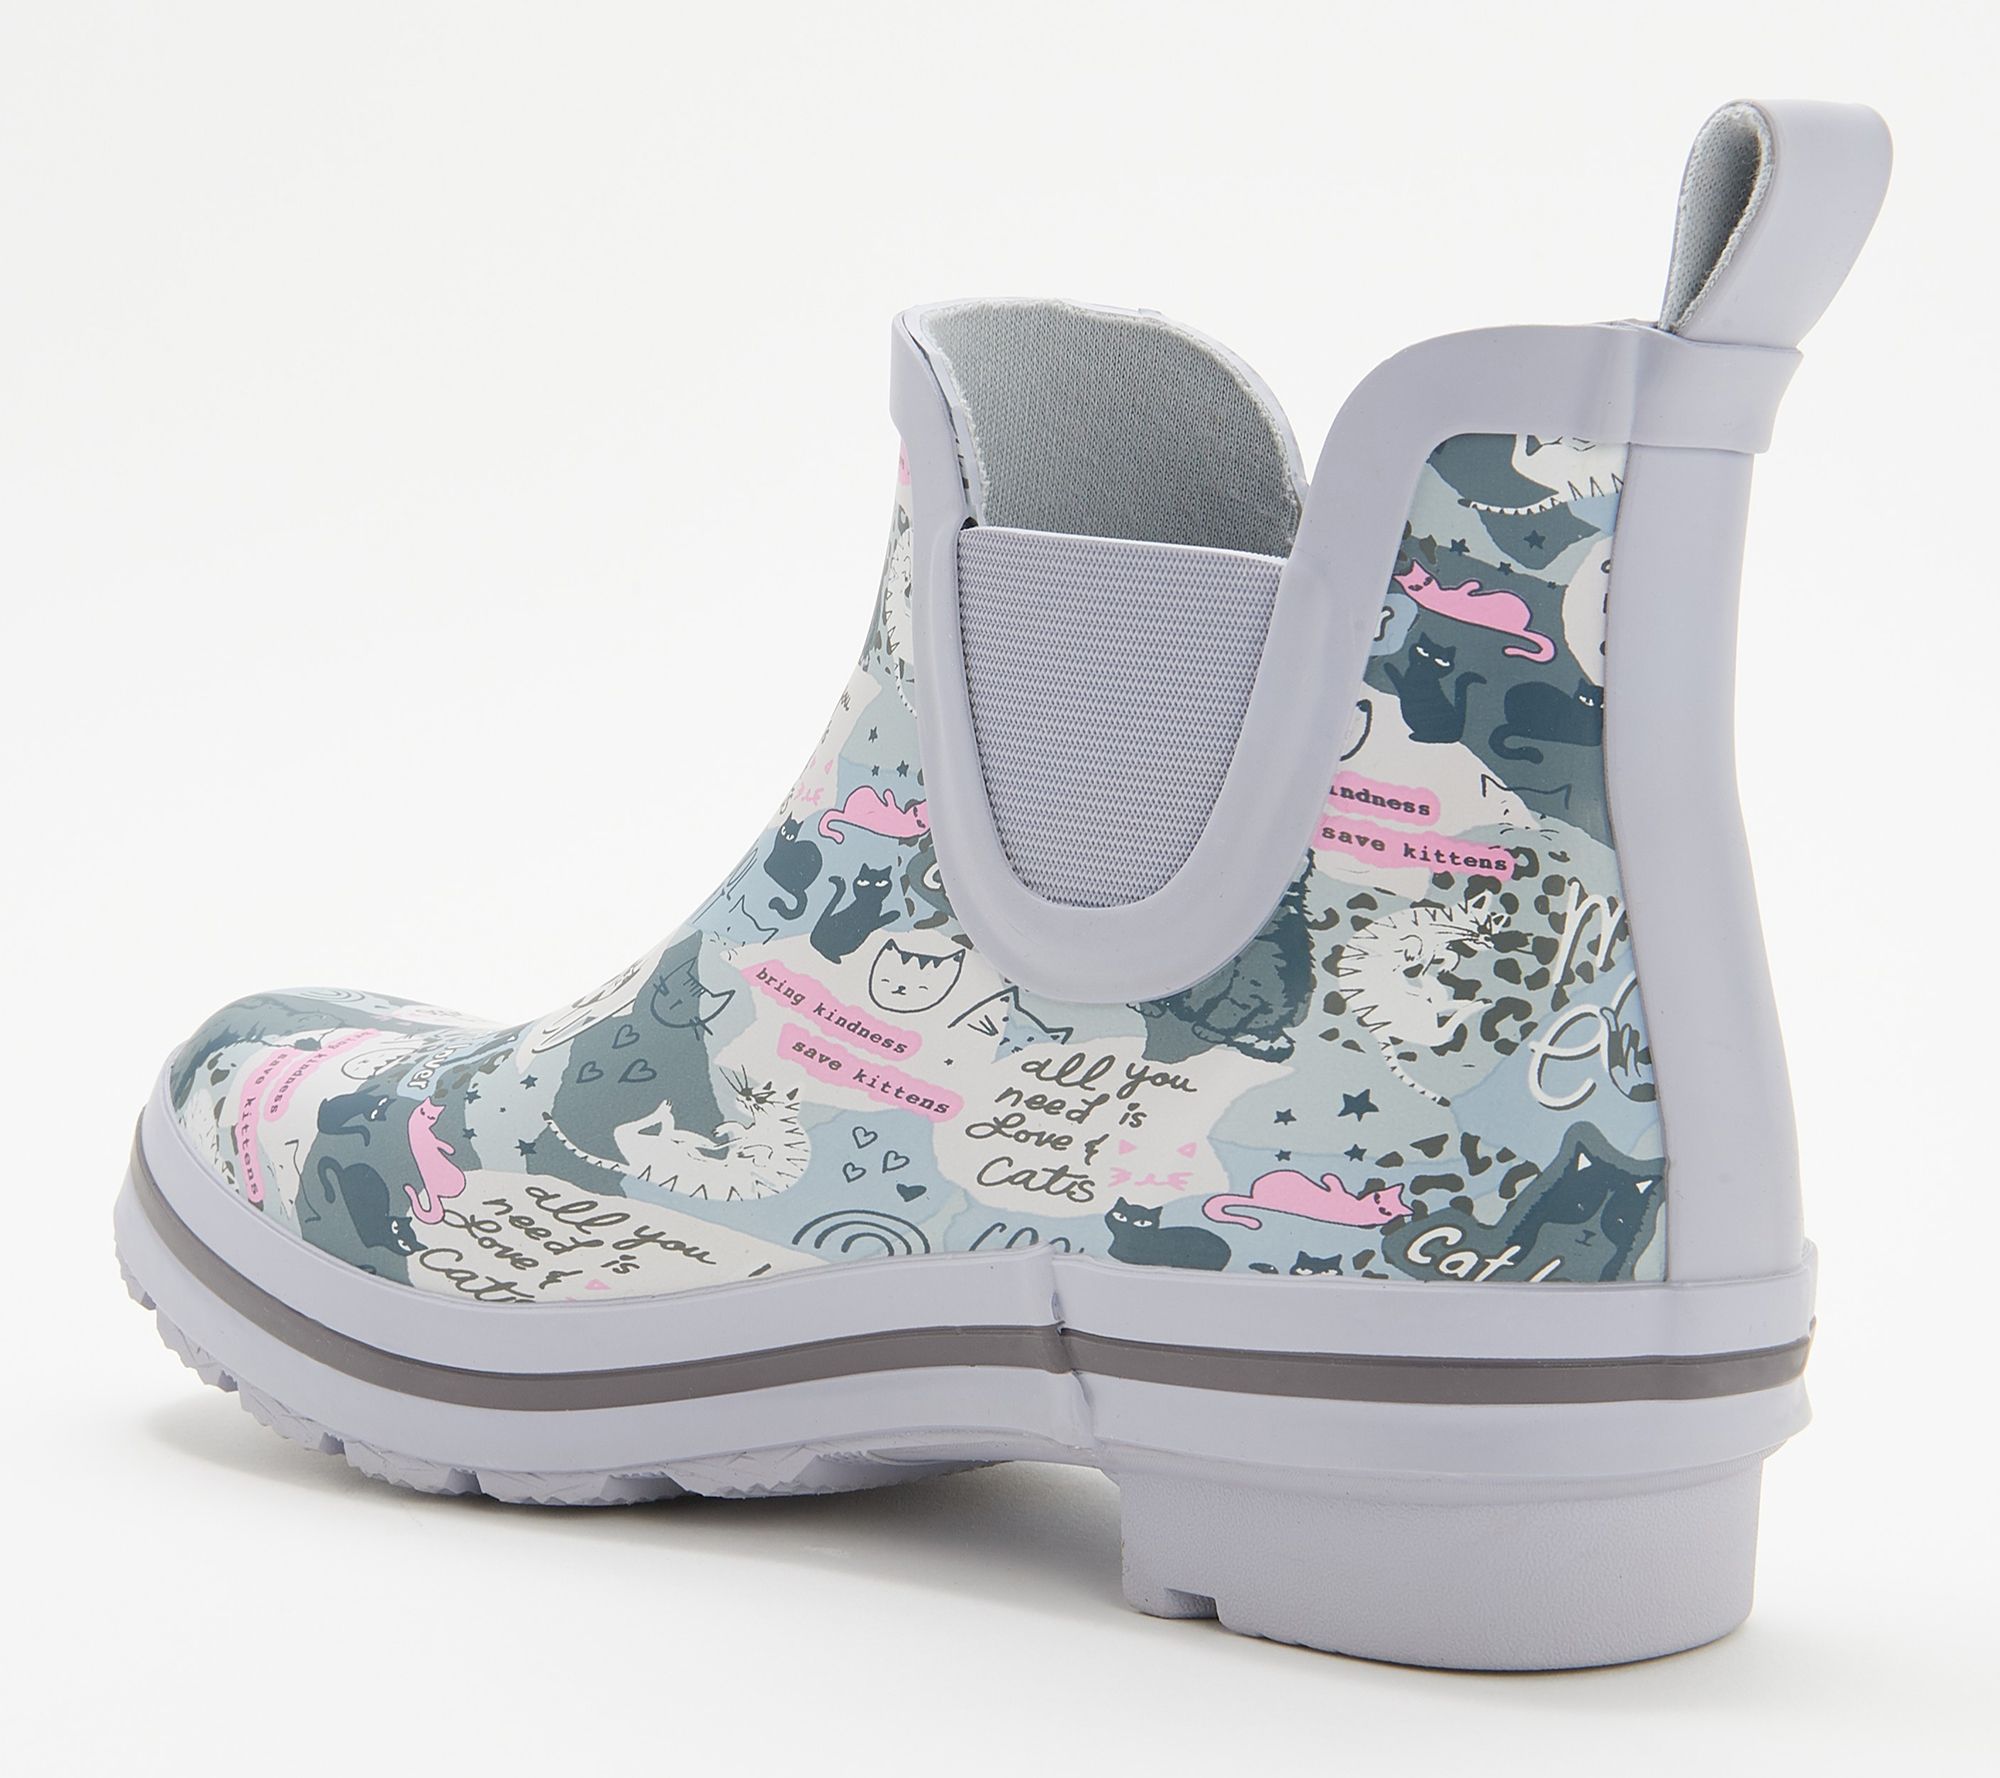 Skechers BOBS Rain Check Waterproof Rain Boots - Cat Print - QVC.com